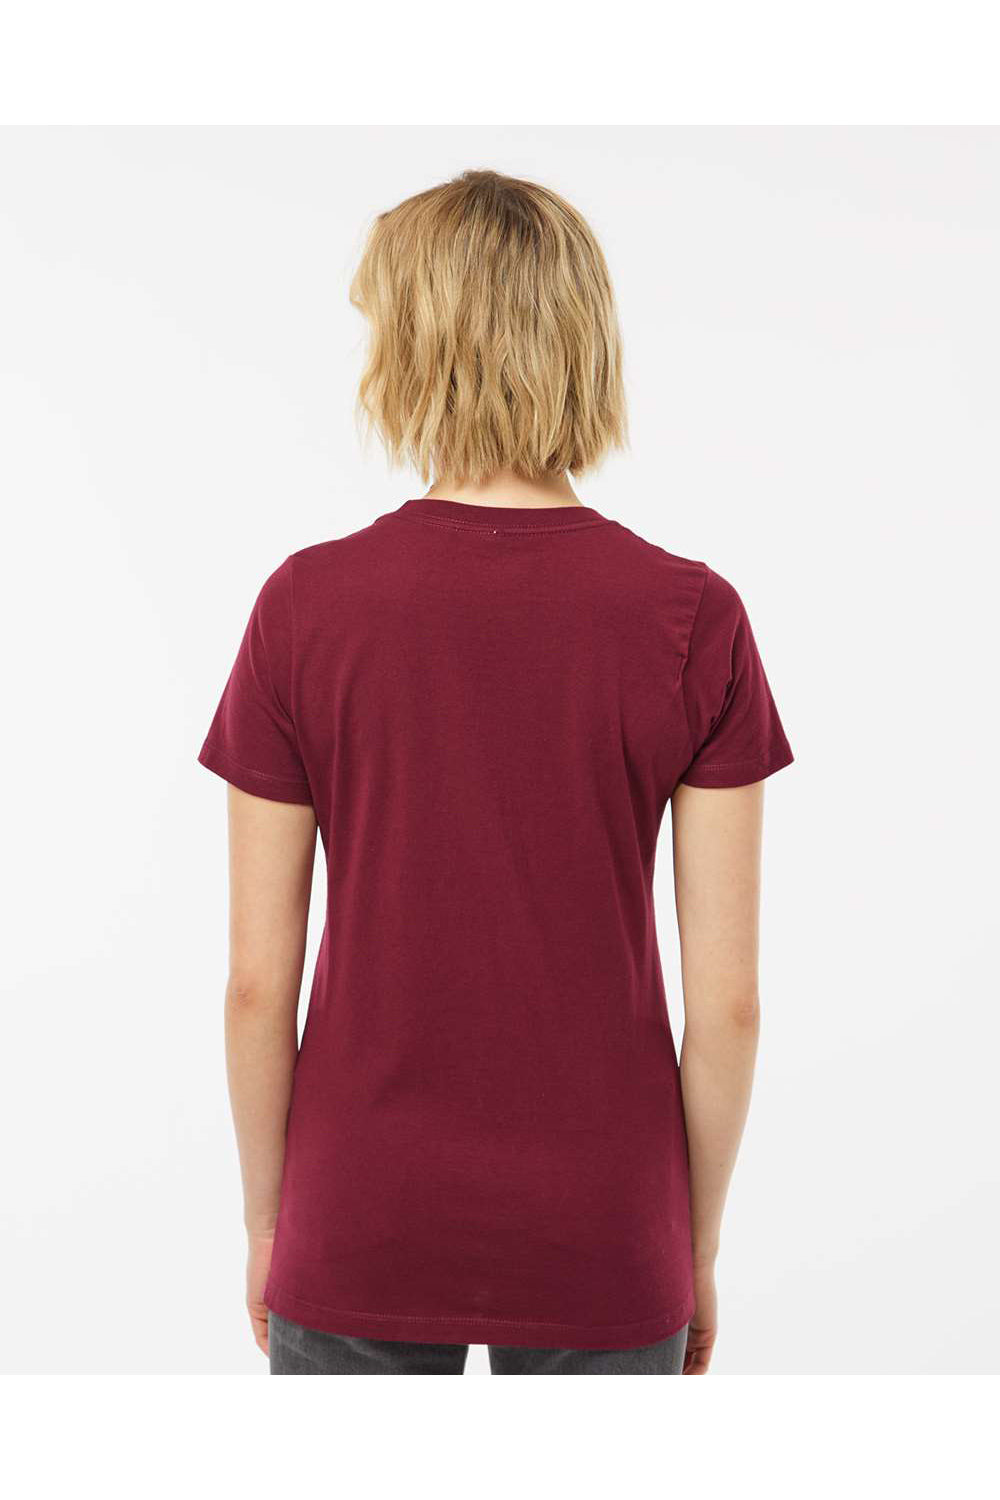 Tultex 516 Womens Premium Short Sleeve Crewneck T-Shirt Burgundy Model Back